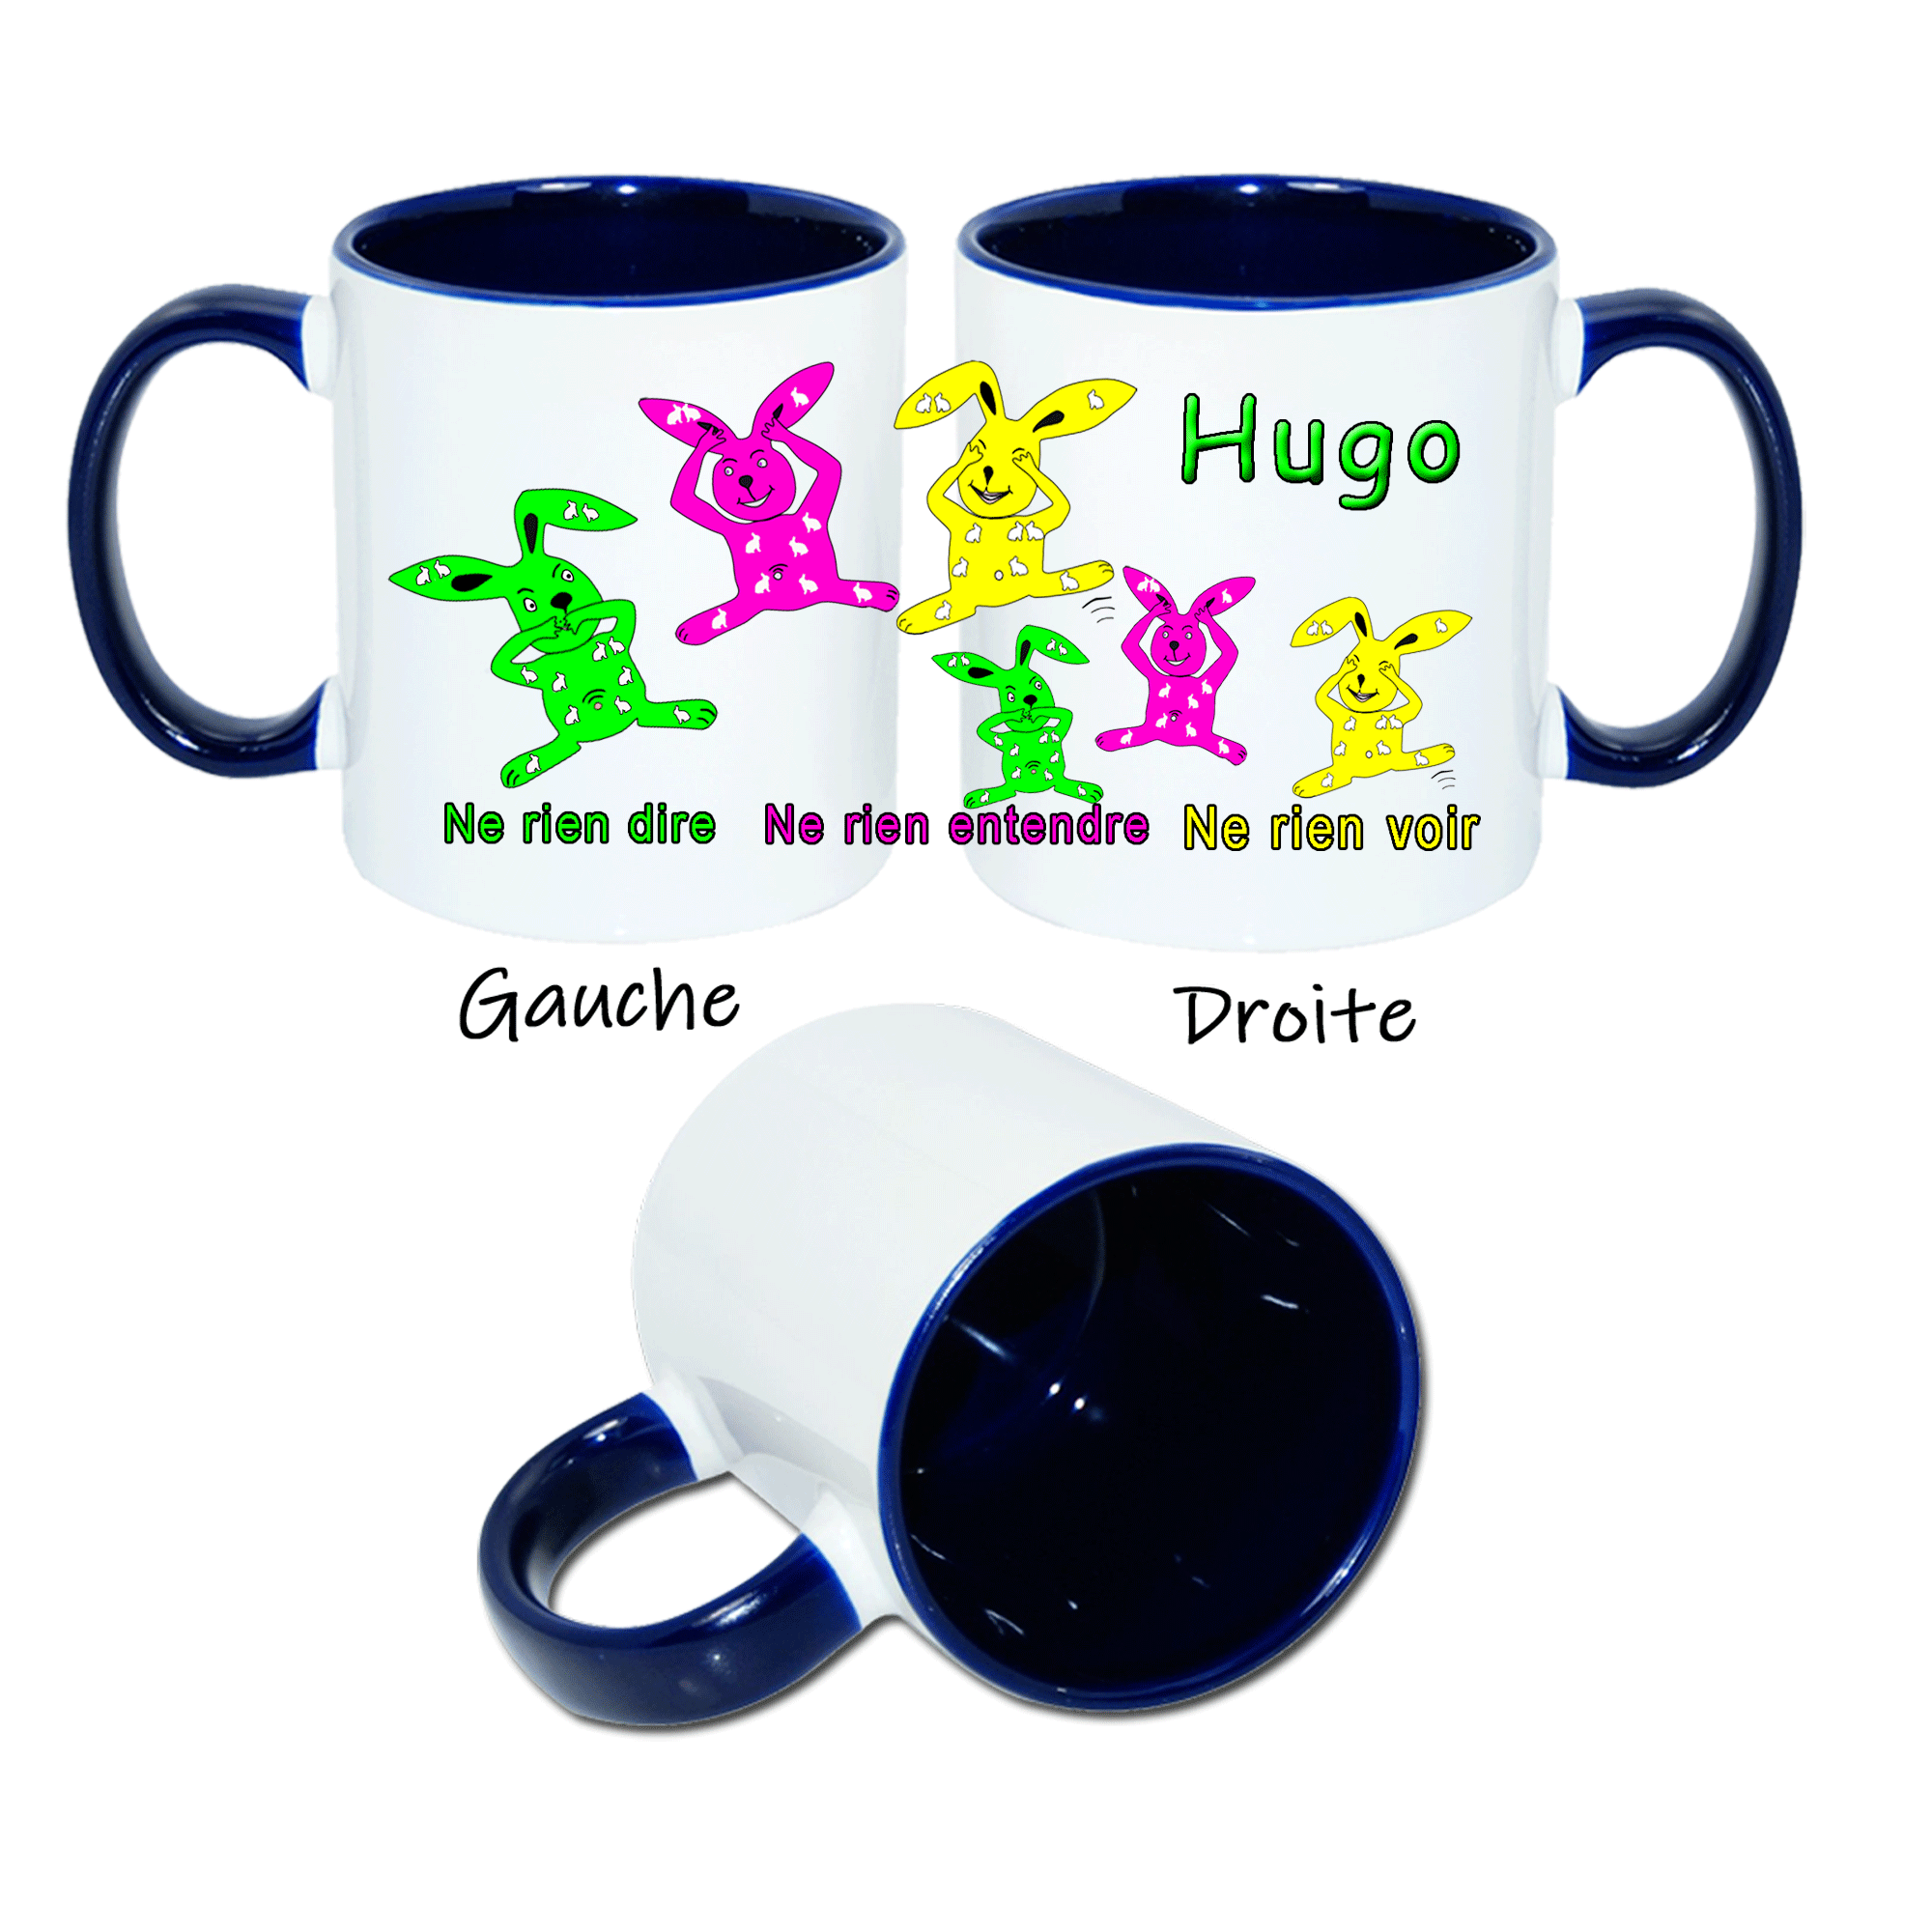 mug-lapin-trois-prenom-personnalisable-personnalisation-personnalise-bleu-marine-ceramique-symbolique-adage-proverbe-entendre-voir-dire-symbole-animal--rongeur-mammifere-hugo